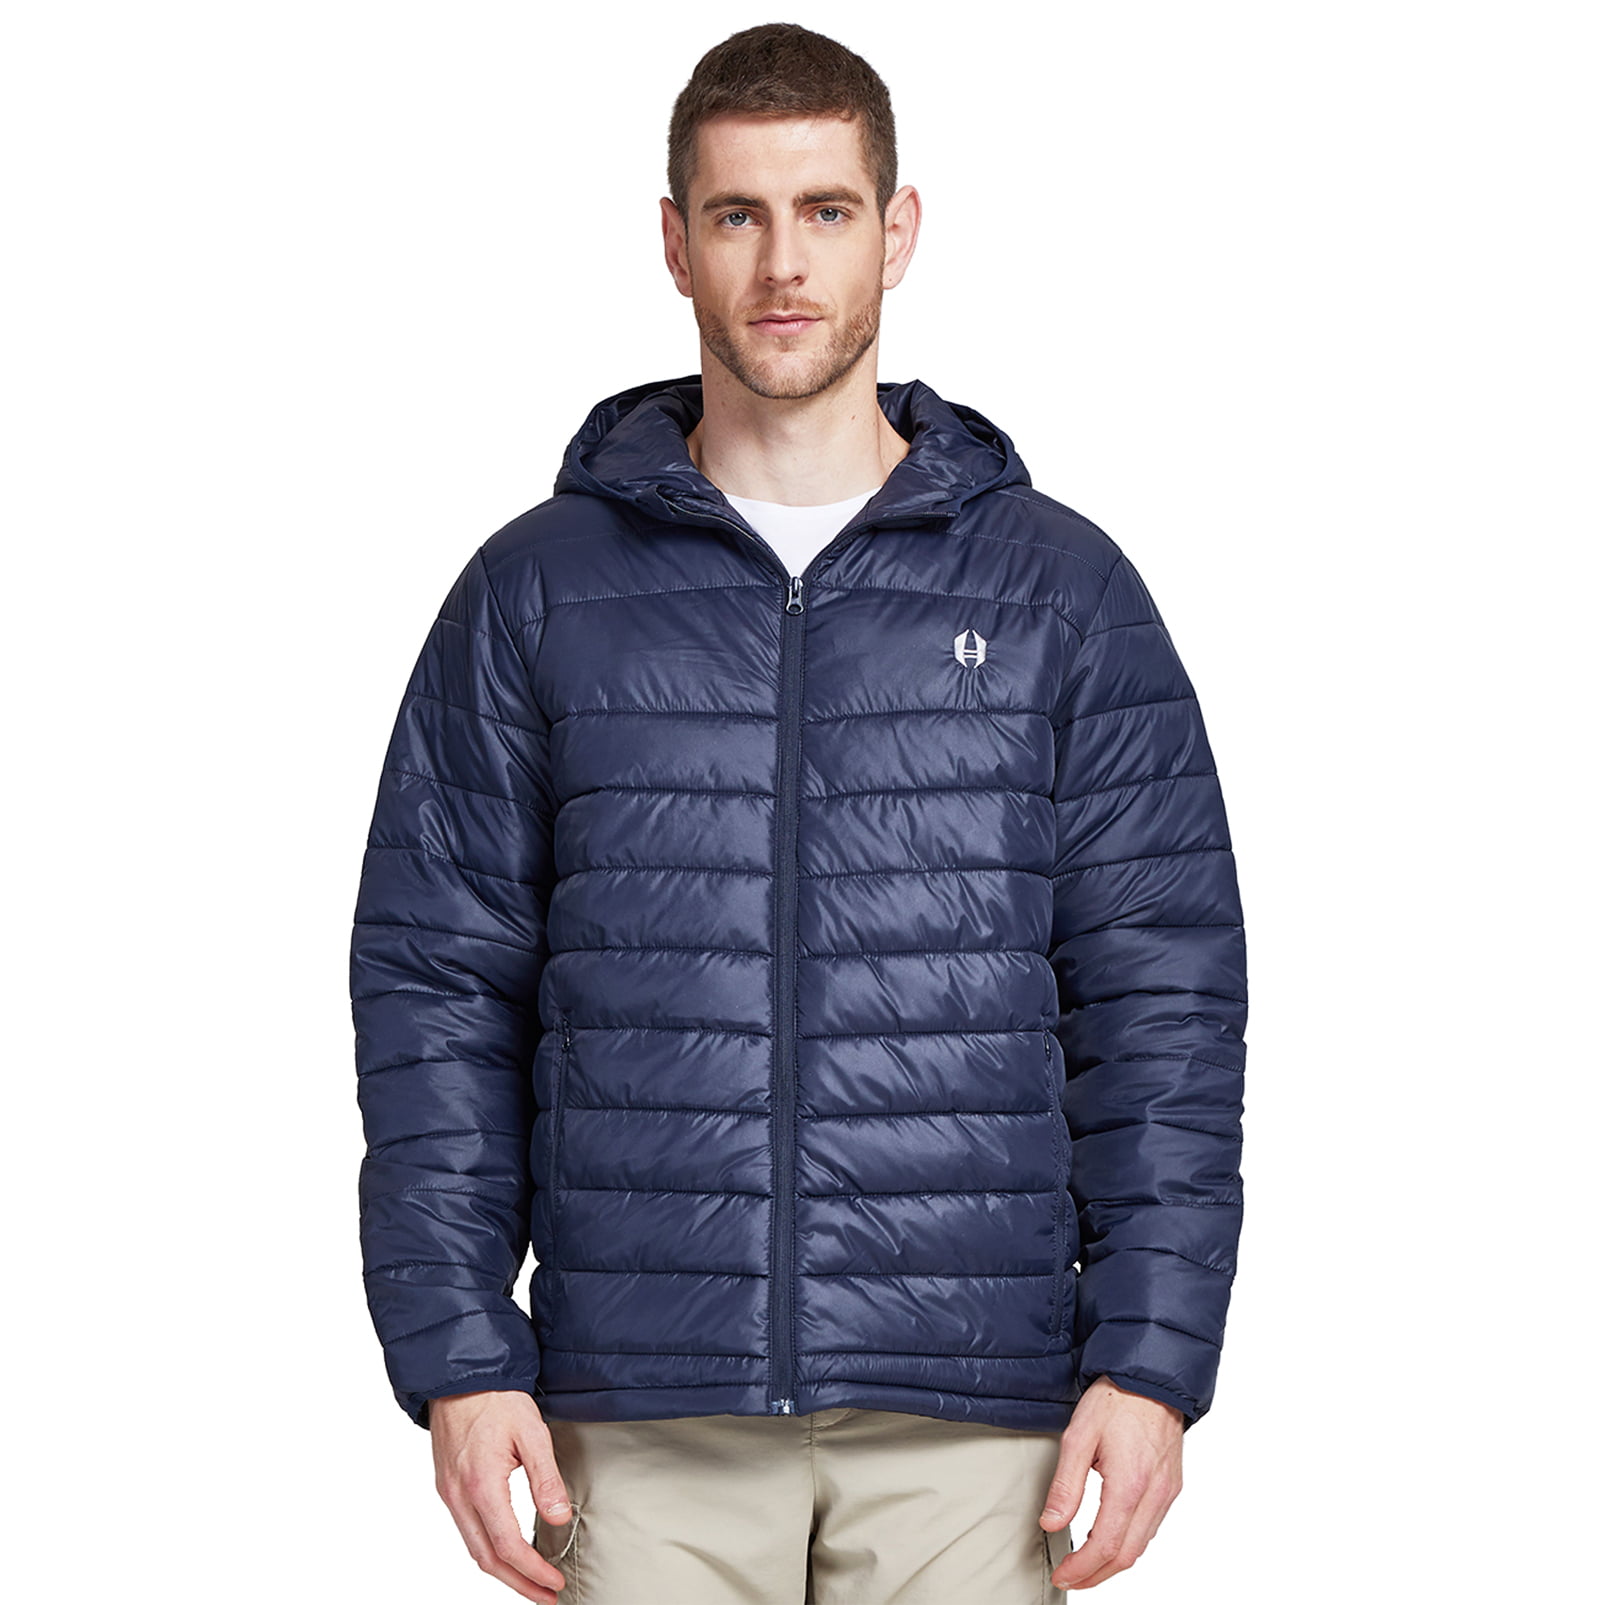 Men's Hybrid Jacket Quilted Lightweight Hooded Insulated Weatherproof Outwear Warm Jacket 